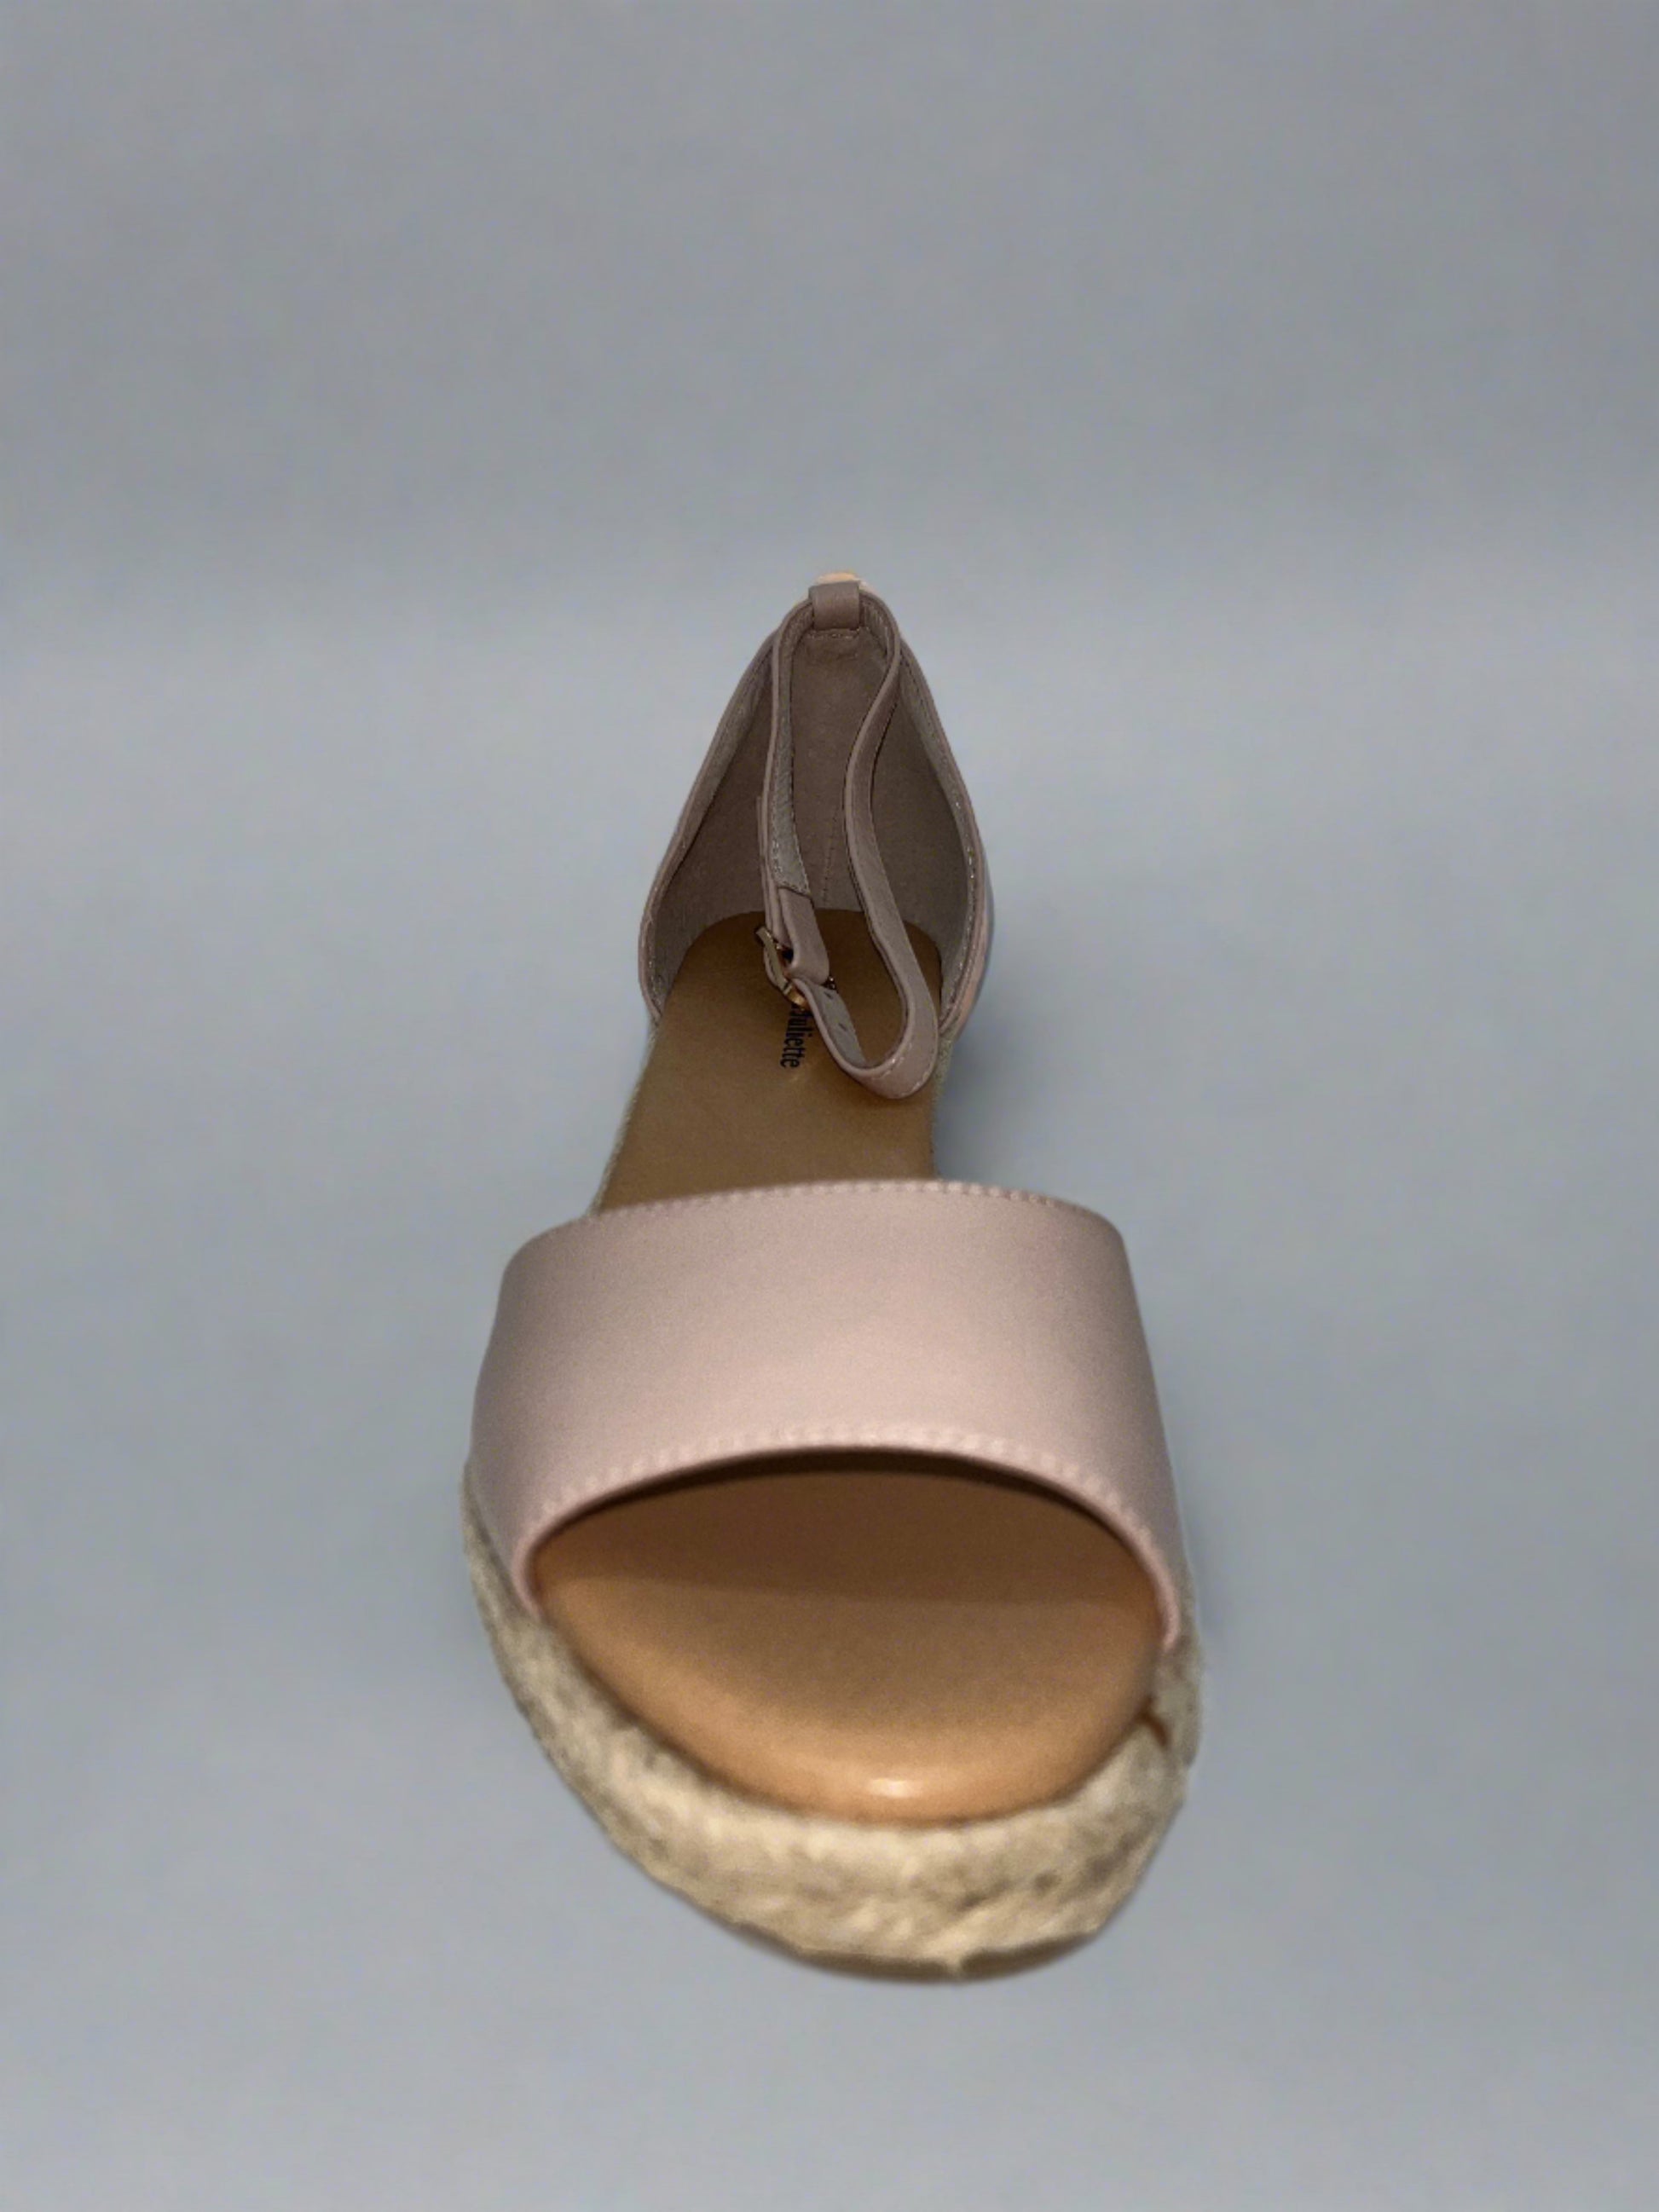 SKIP WEDGE - DJANGO AND JULIETTE - 36, 37, 38, 39, 40, 41, 42, BLACK, ROSE, TAN, wedge, womens footwear - Stomp Shoes Darwin